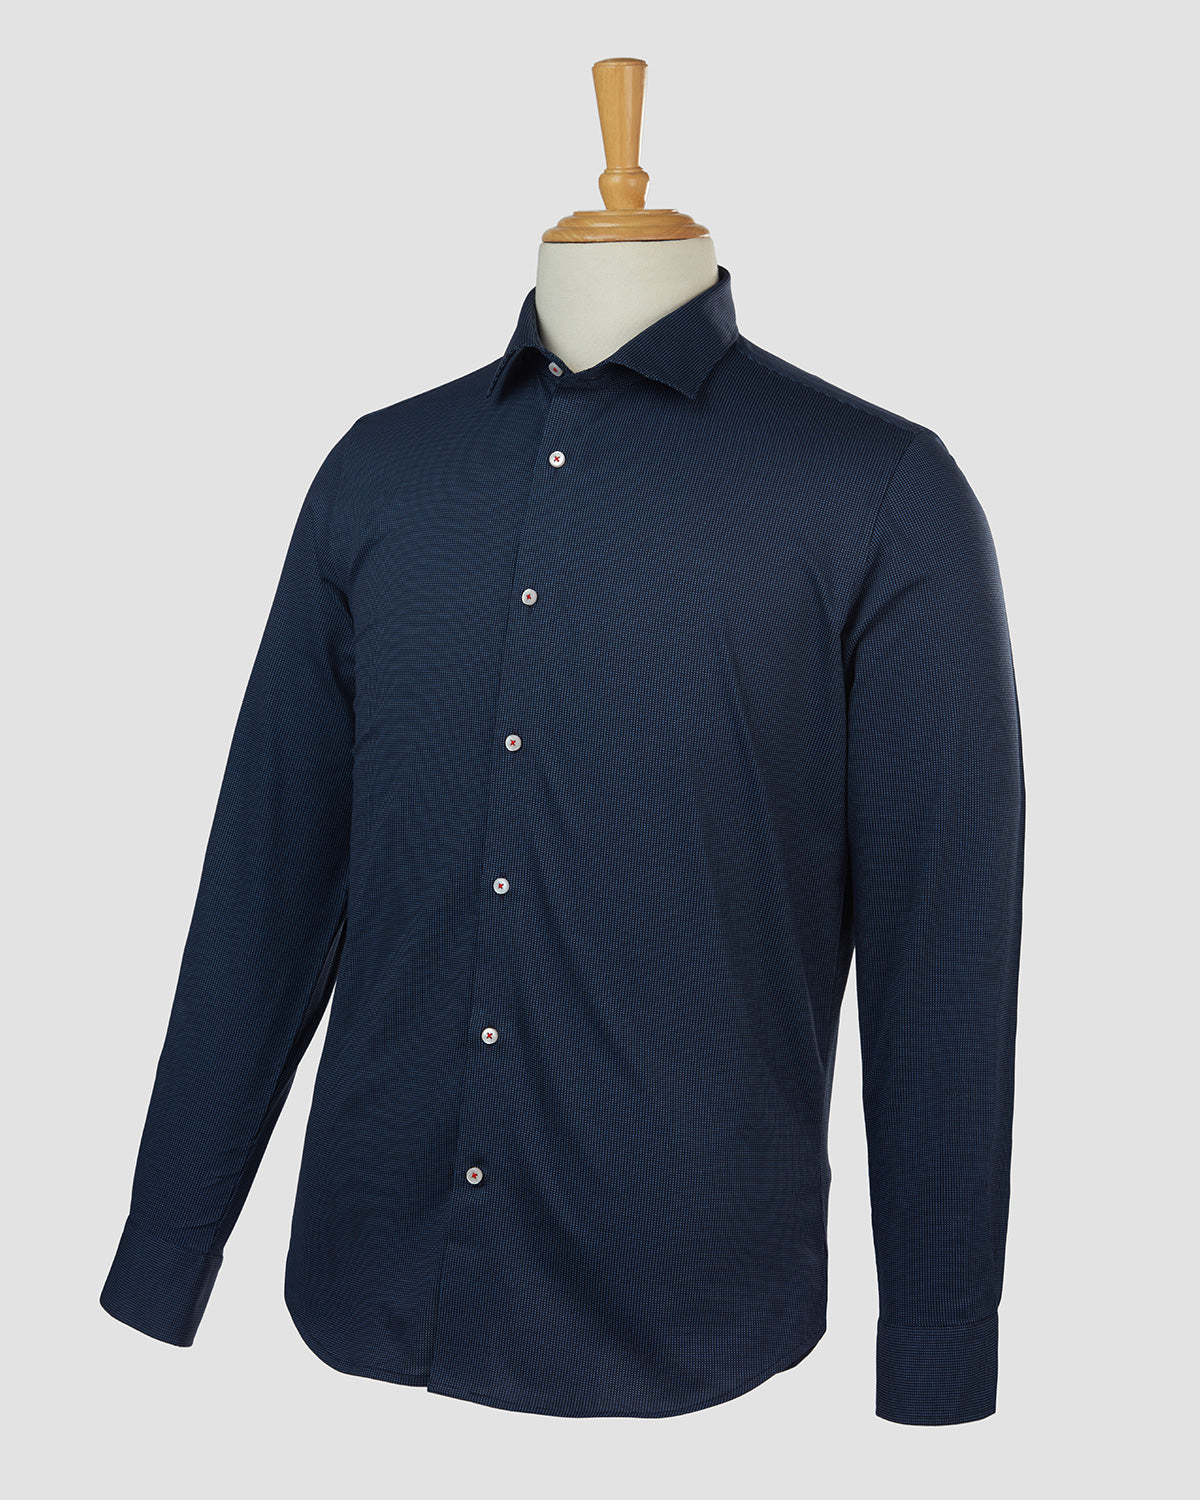 Bombay Shirt Company - Blue Zircon Knit Shirt